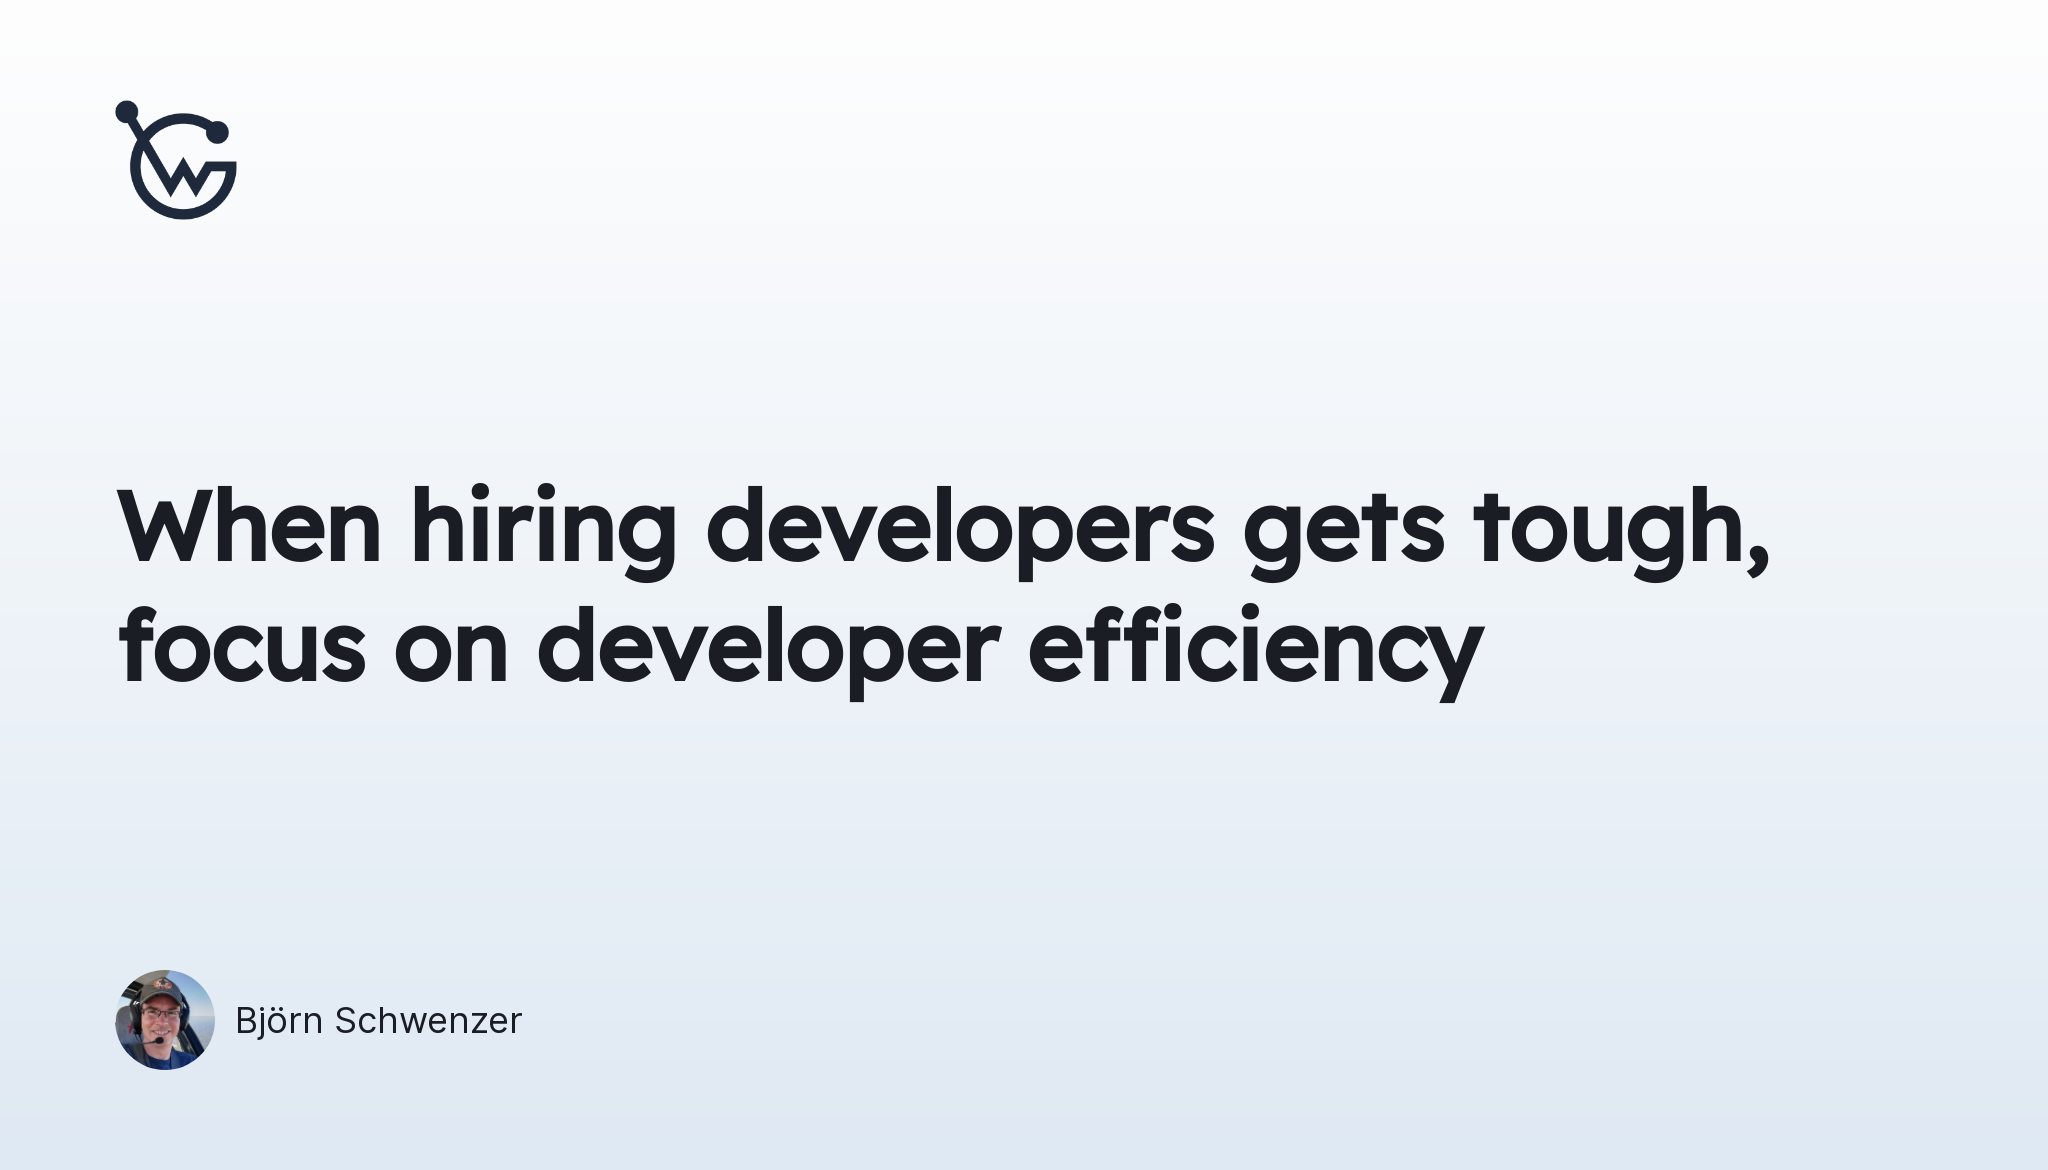 When hiring developers gets tough, focus on developer efficiency